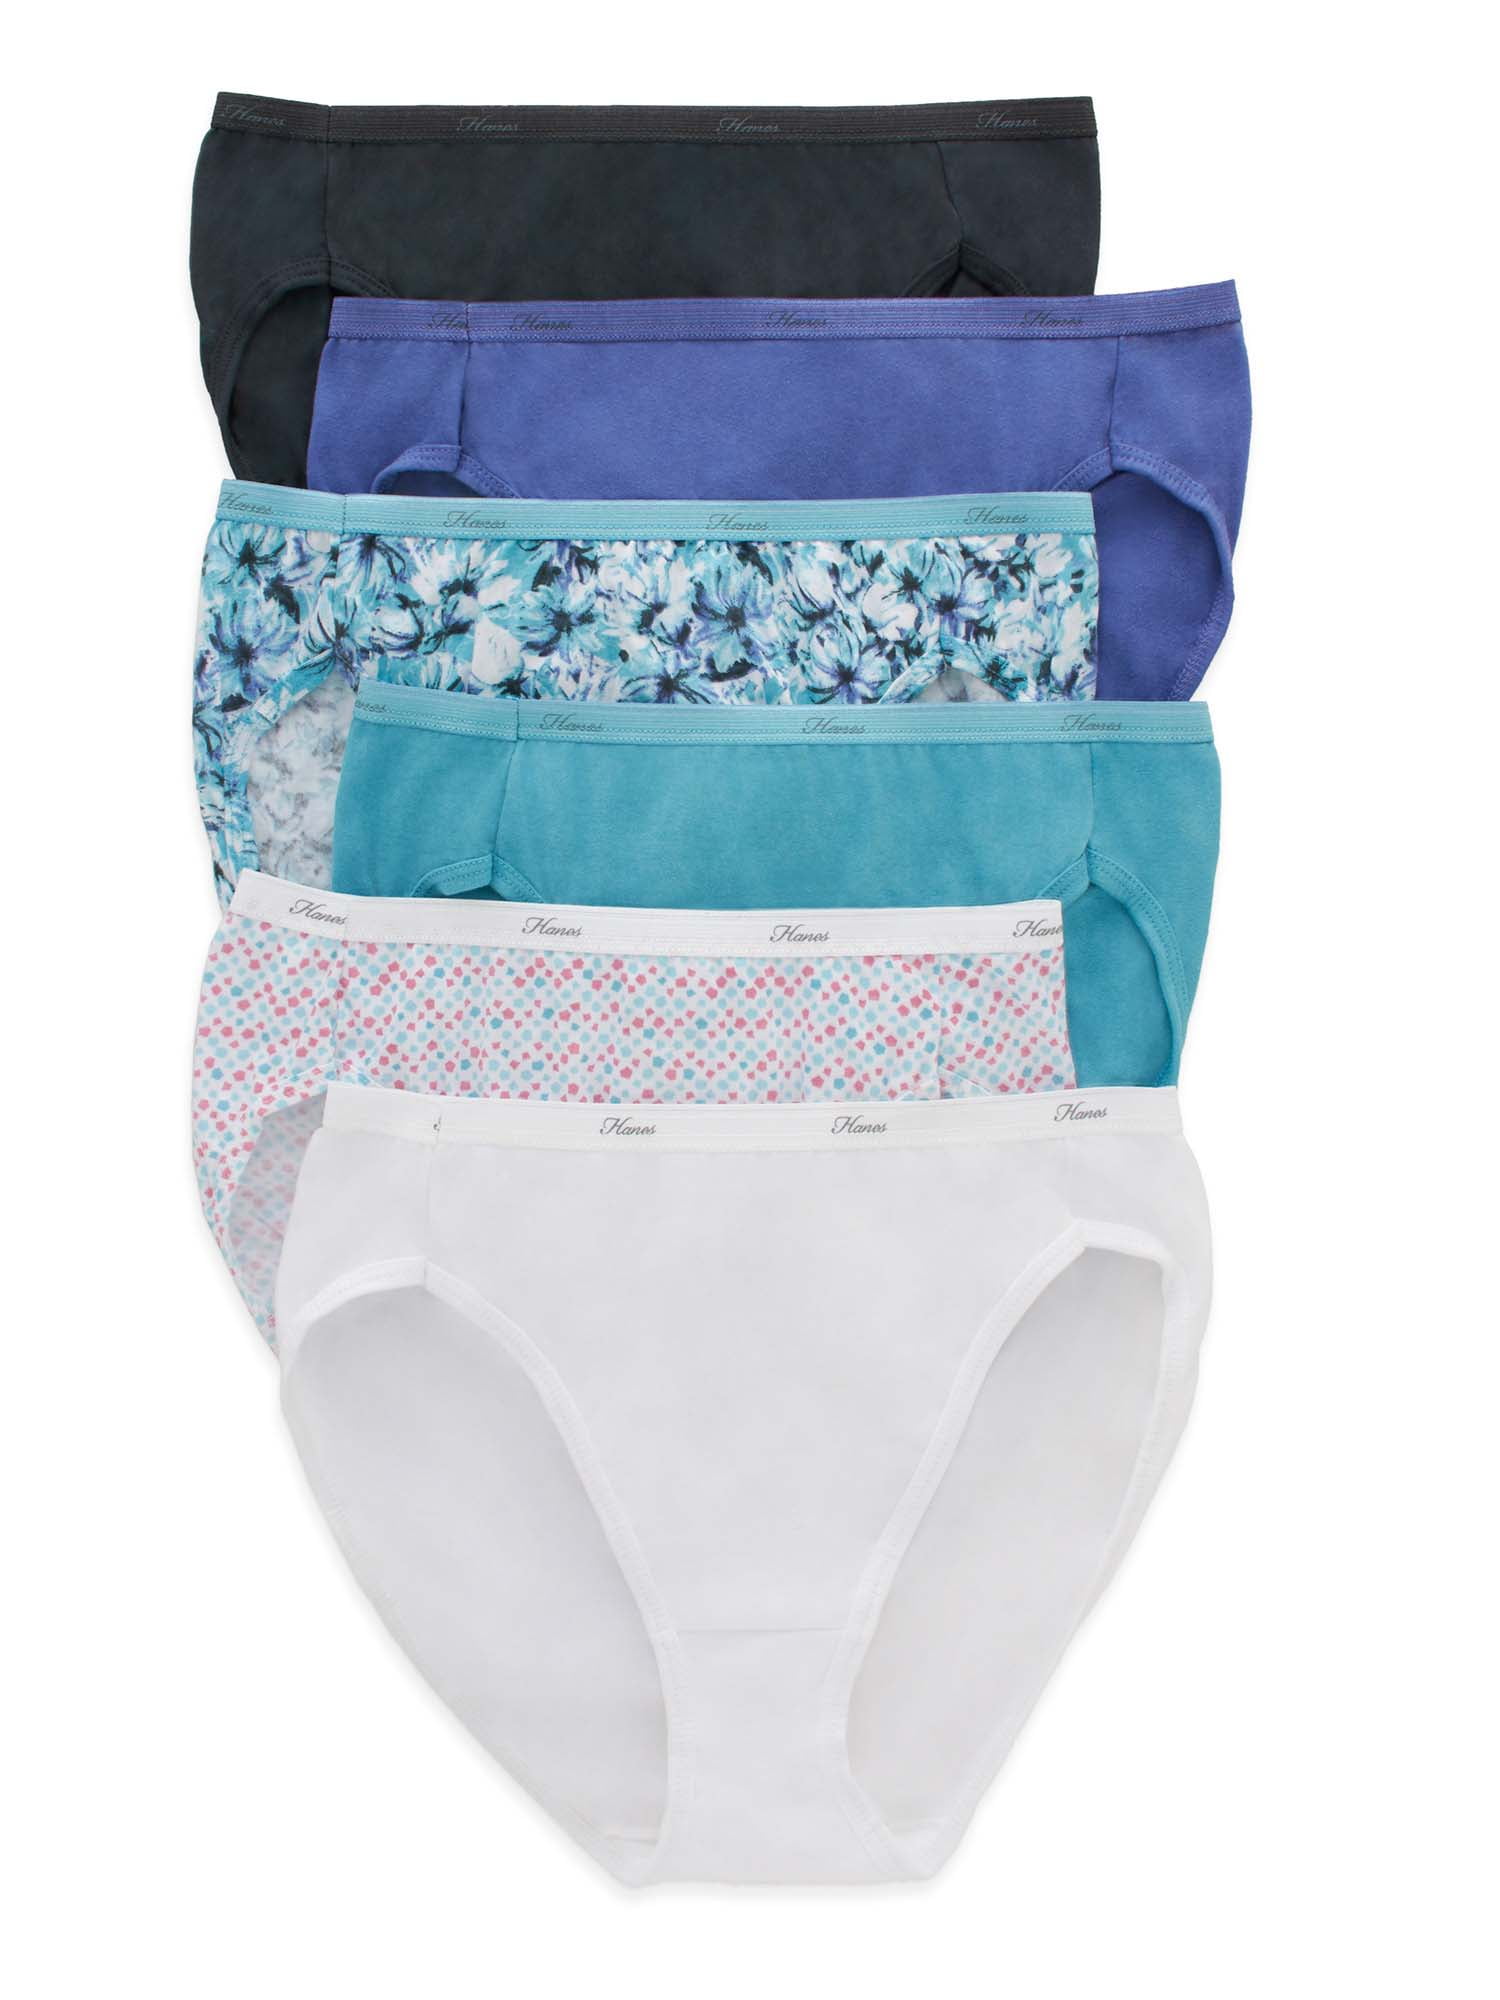 Hanes 10-Pack Hi-Cuts Panties Women's Underwear Breathable Cotton All Black  6-10